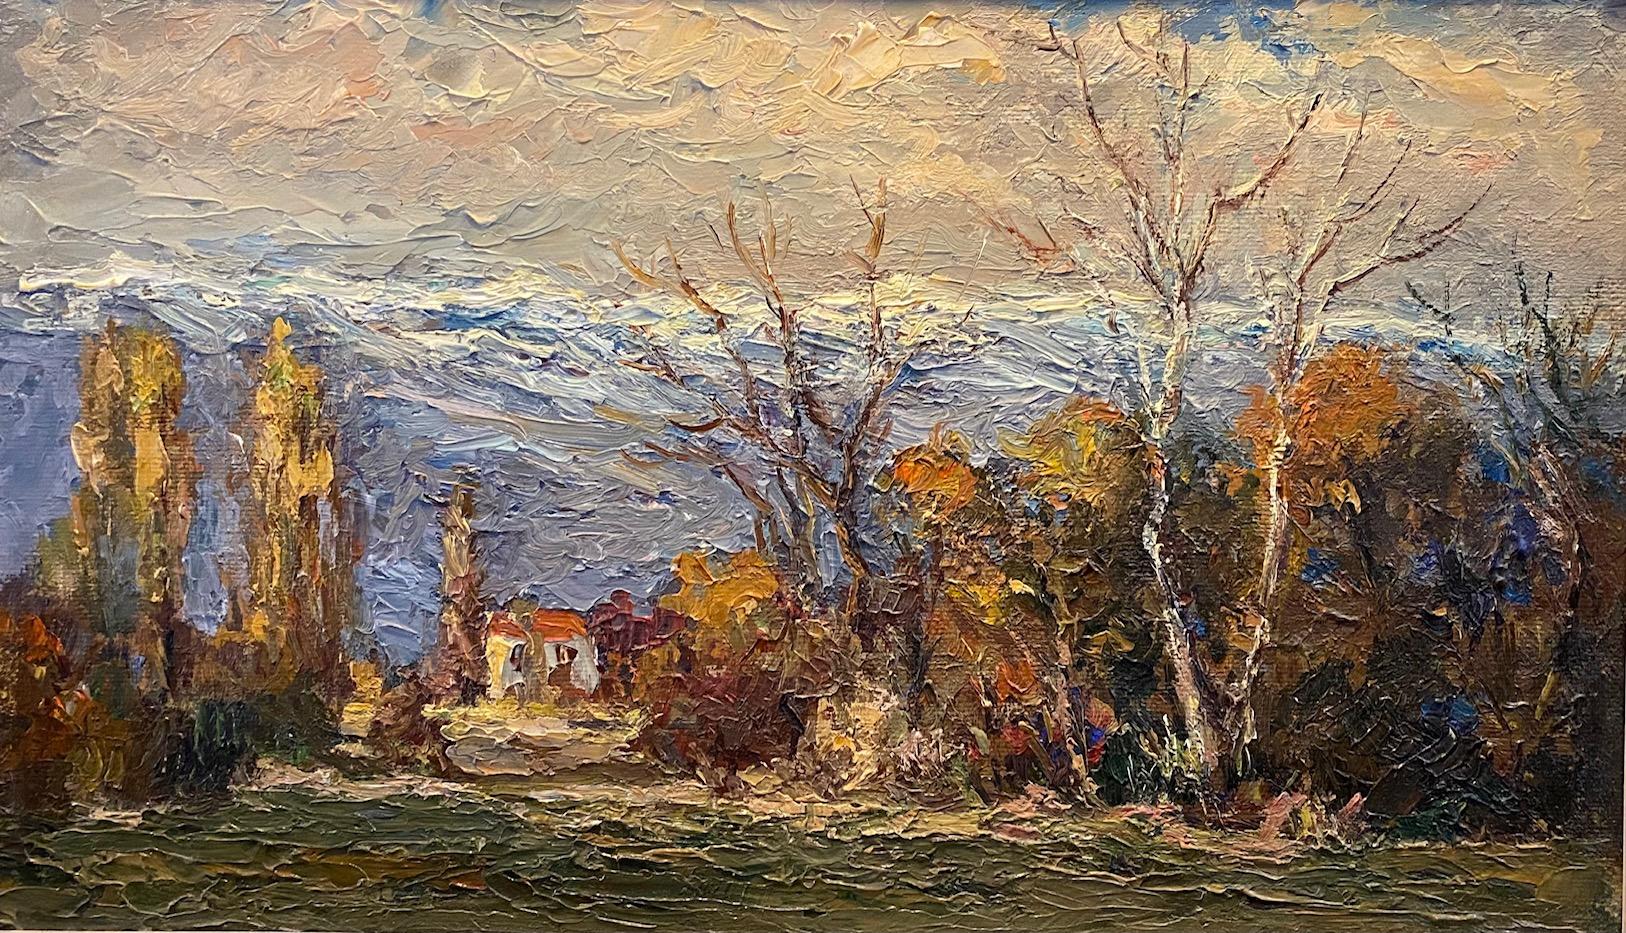 Impressionist mountain range by Harry Urban - Oil on wood 53x33cm